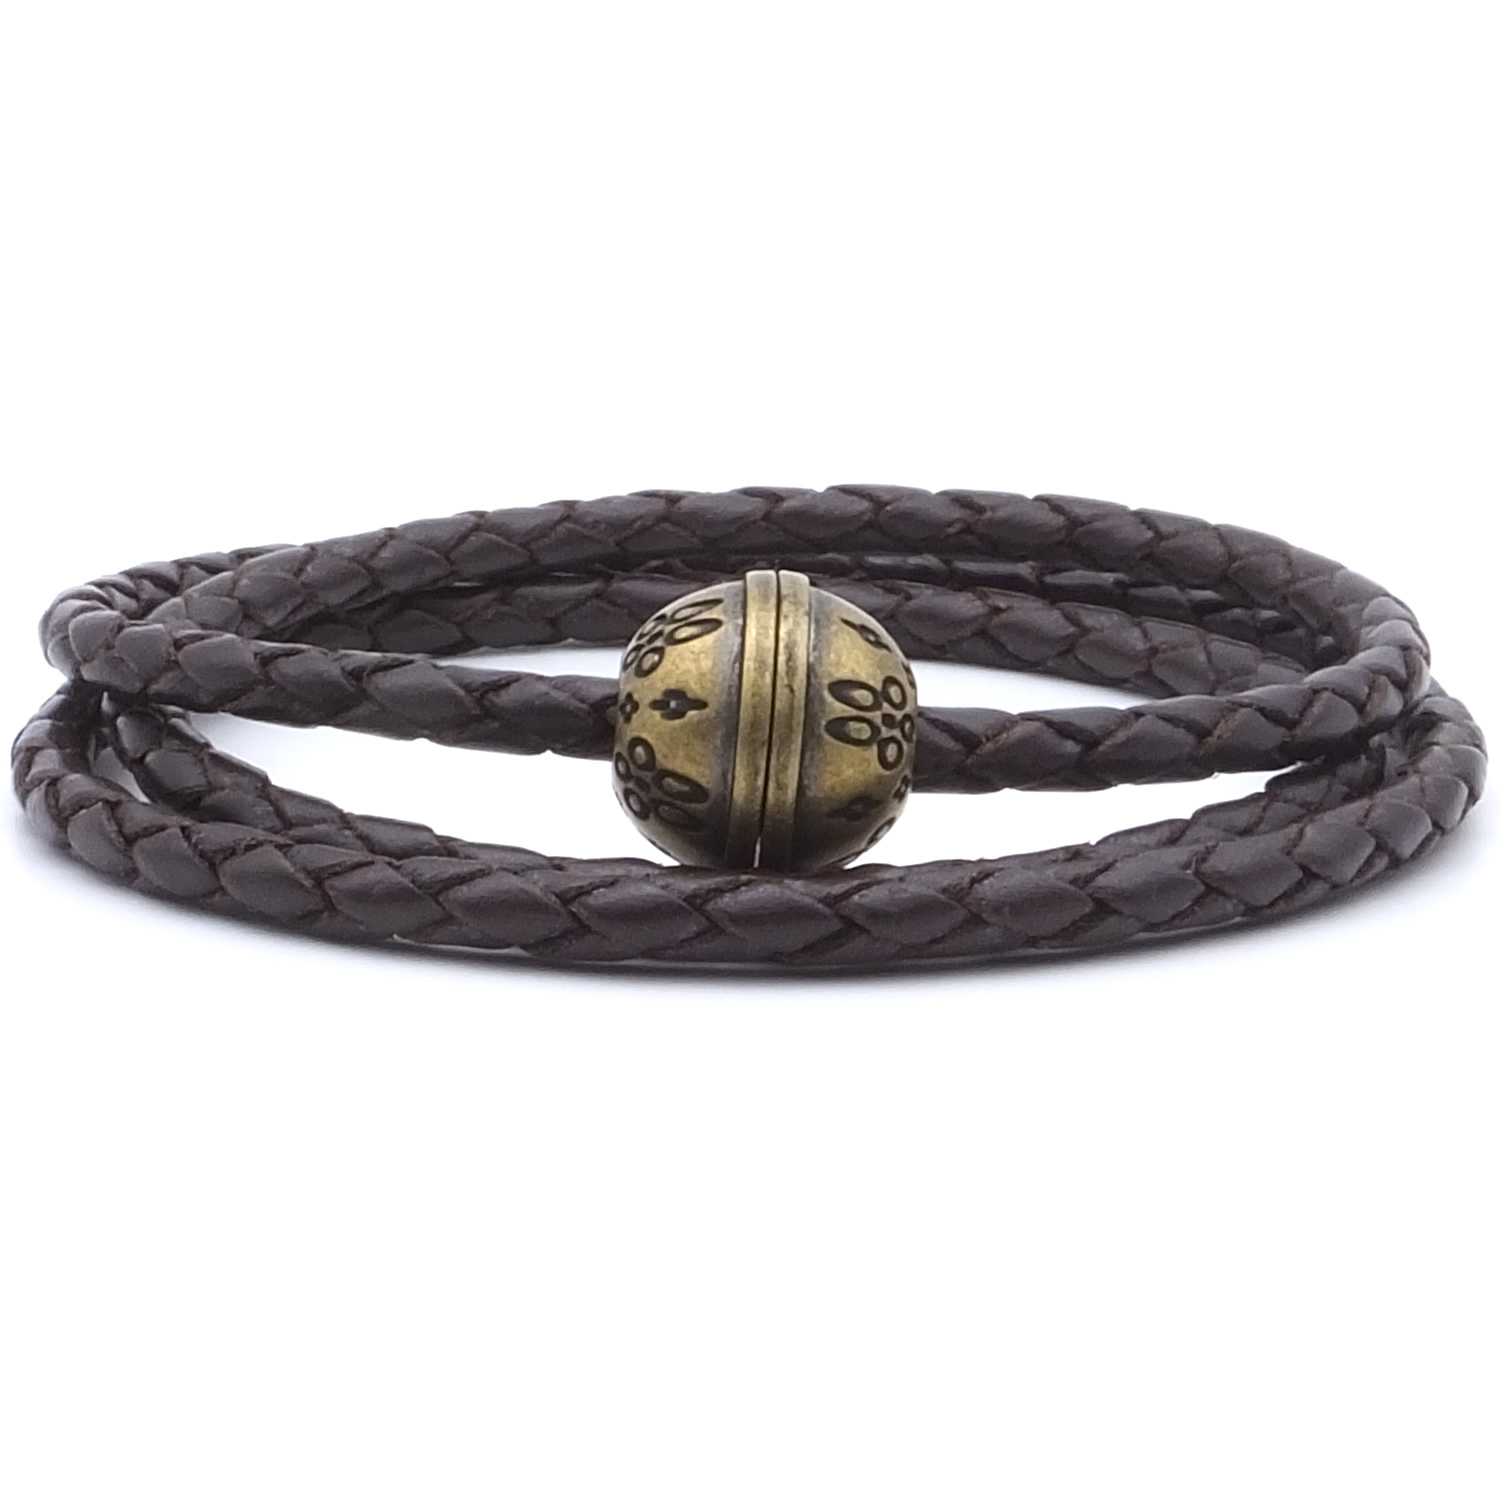 Mens leather bracelet Mens triple wrap turquoise braided leather bracelet